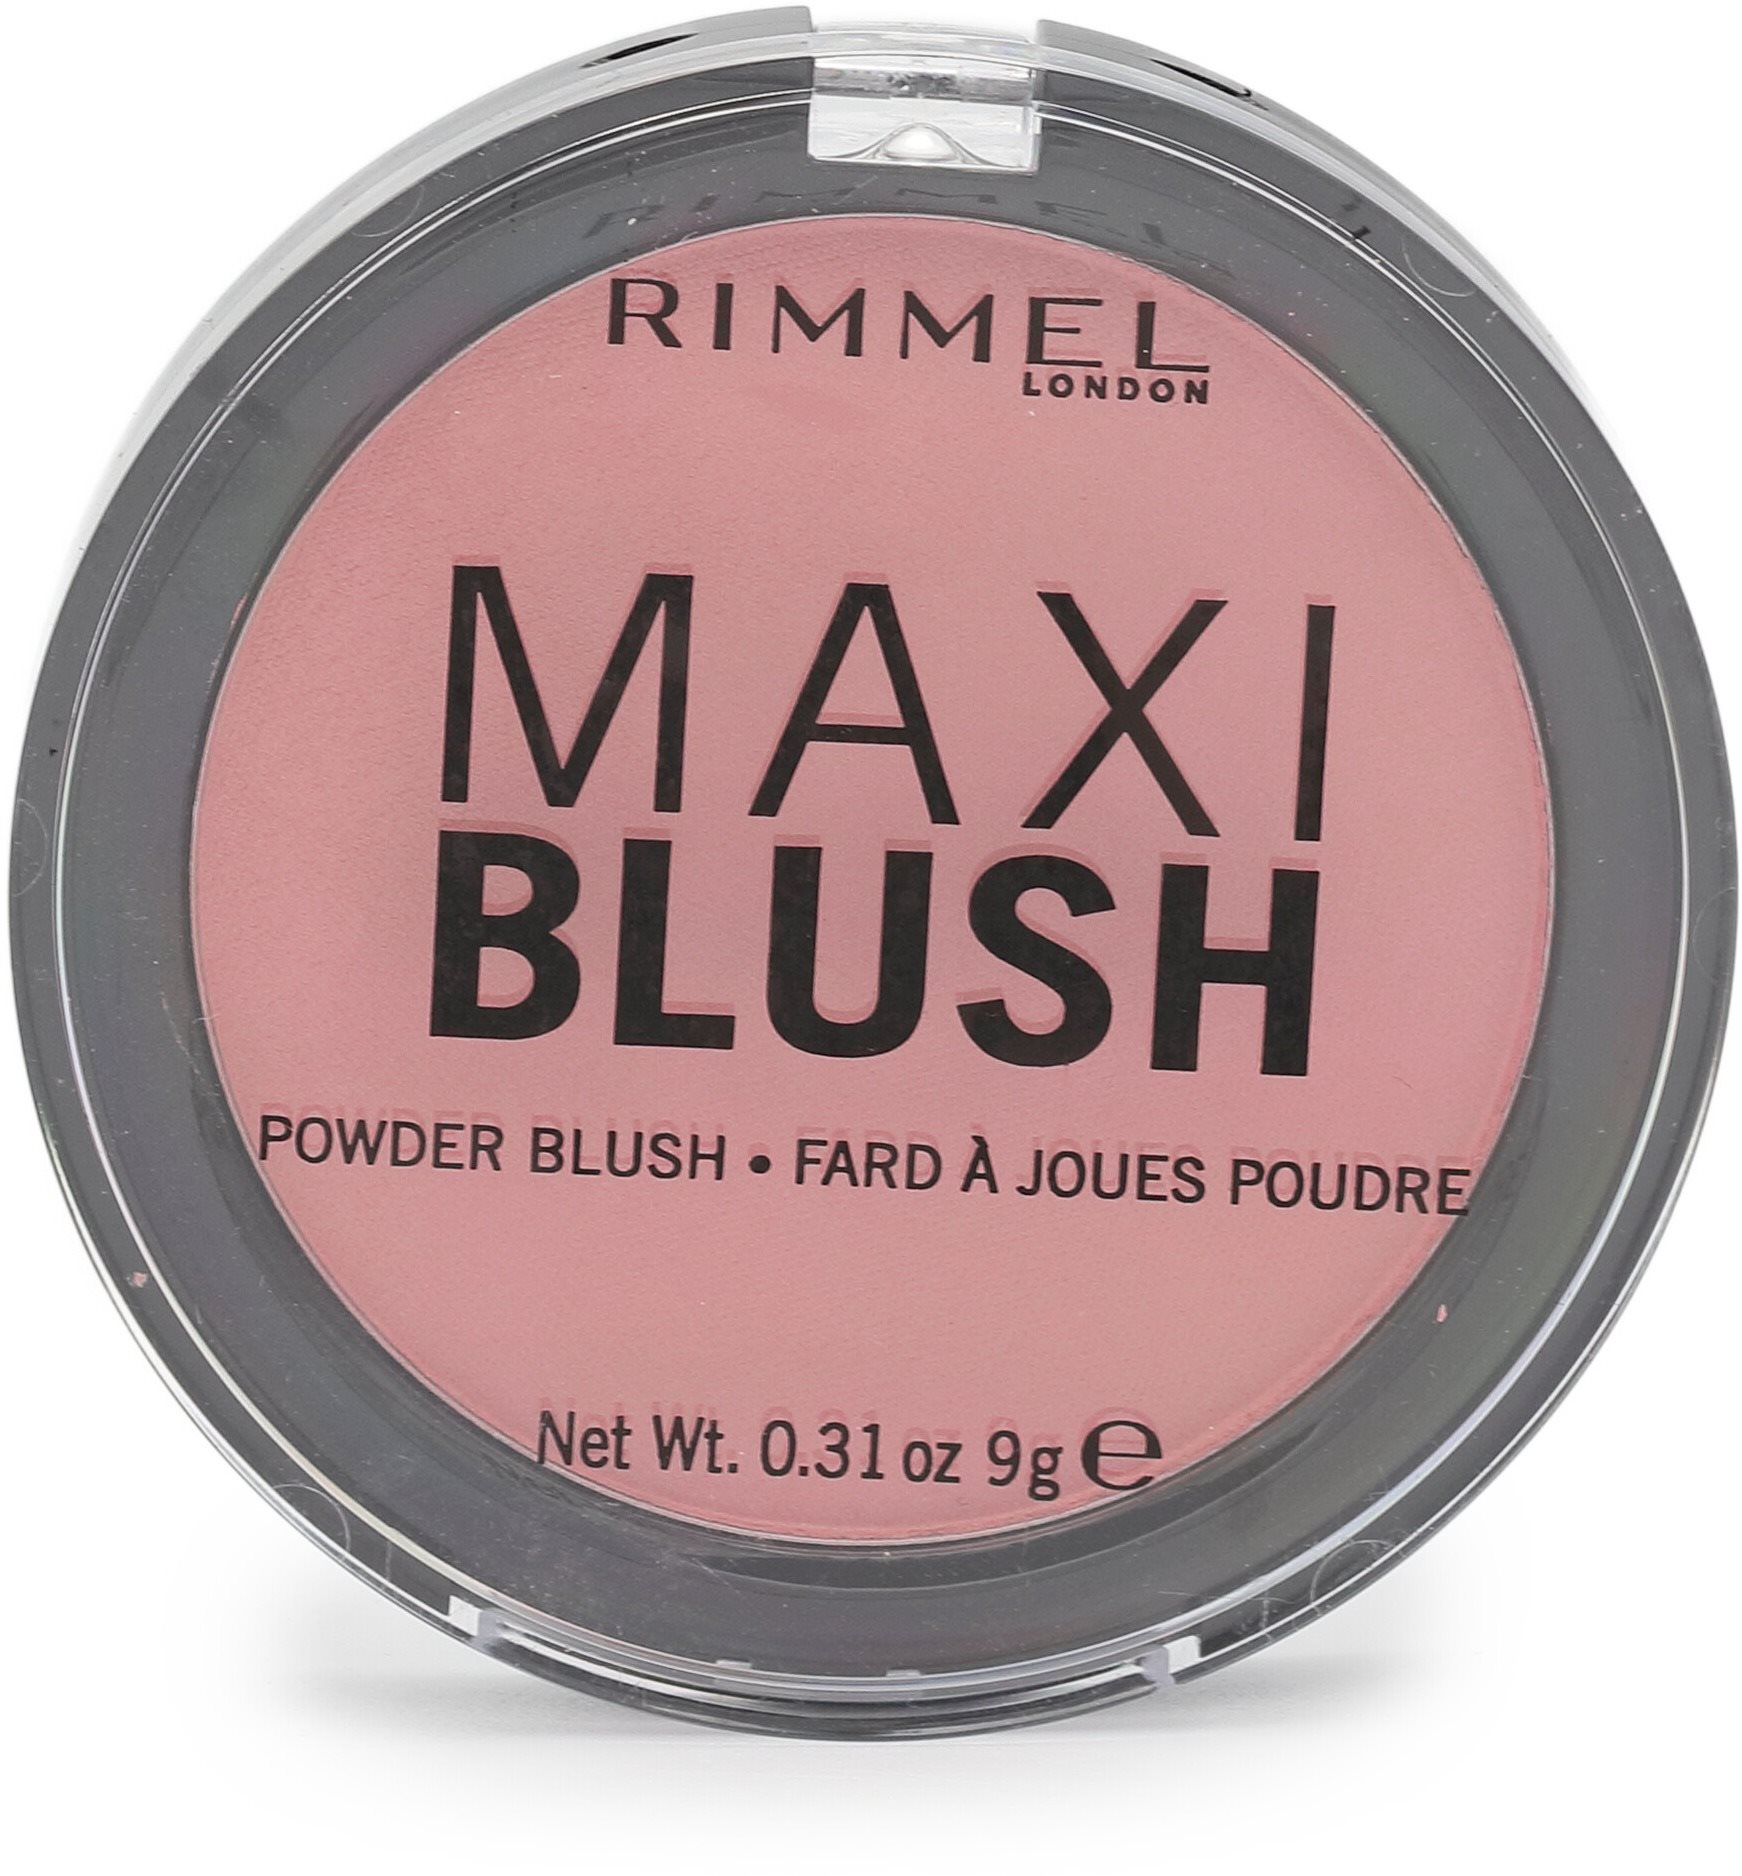 RIMMEL LONDON Maxi Blush Powder Blush 006 Exposed 9 g